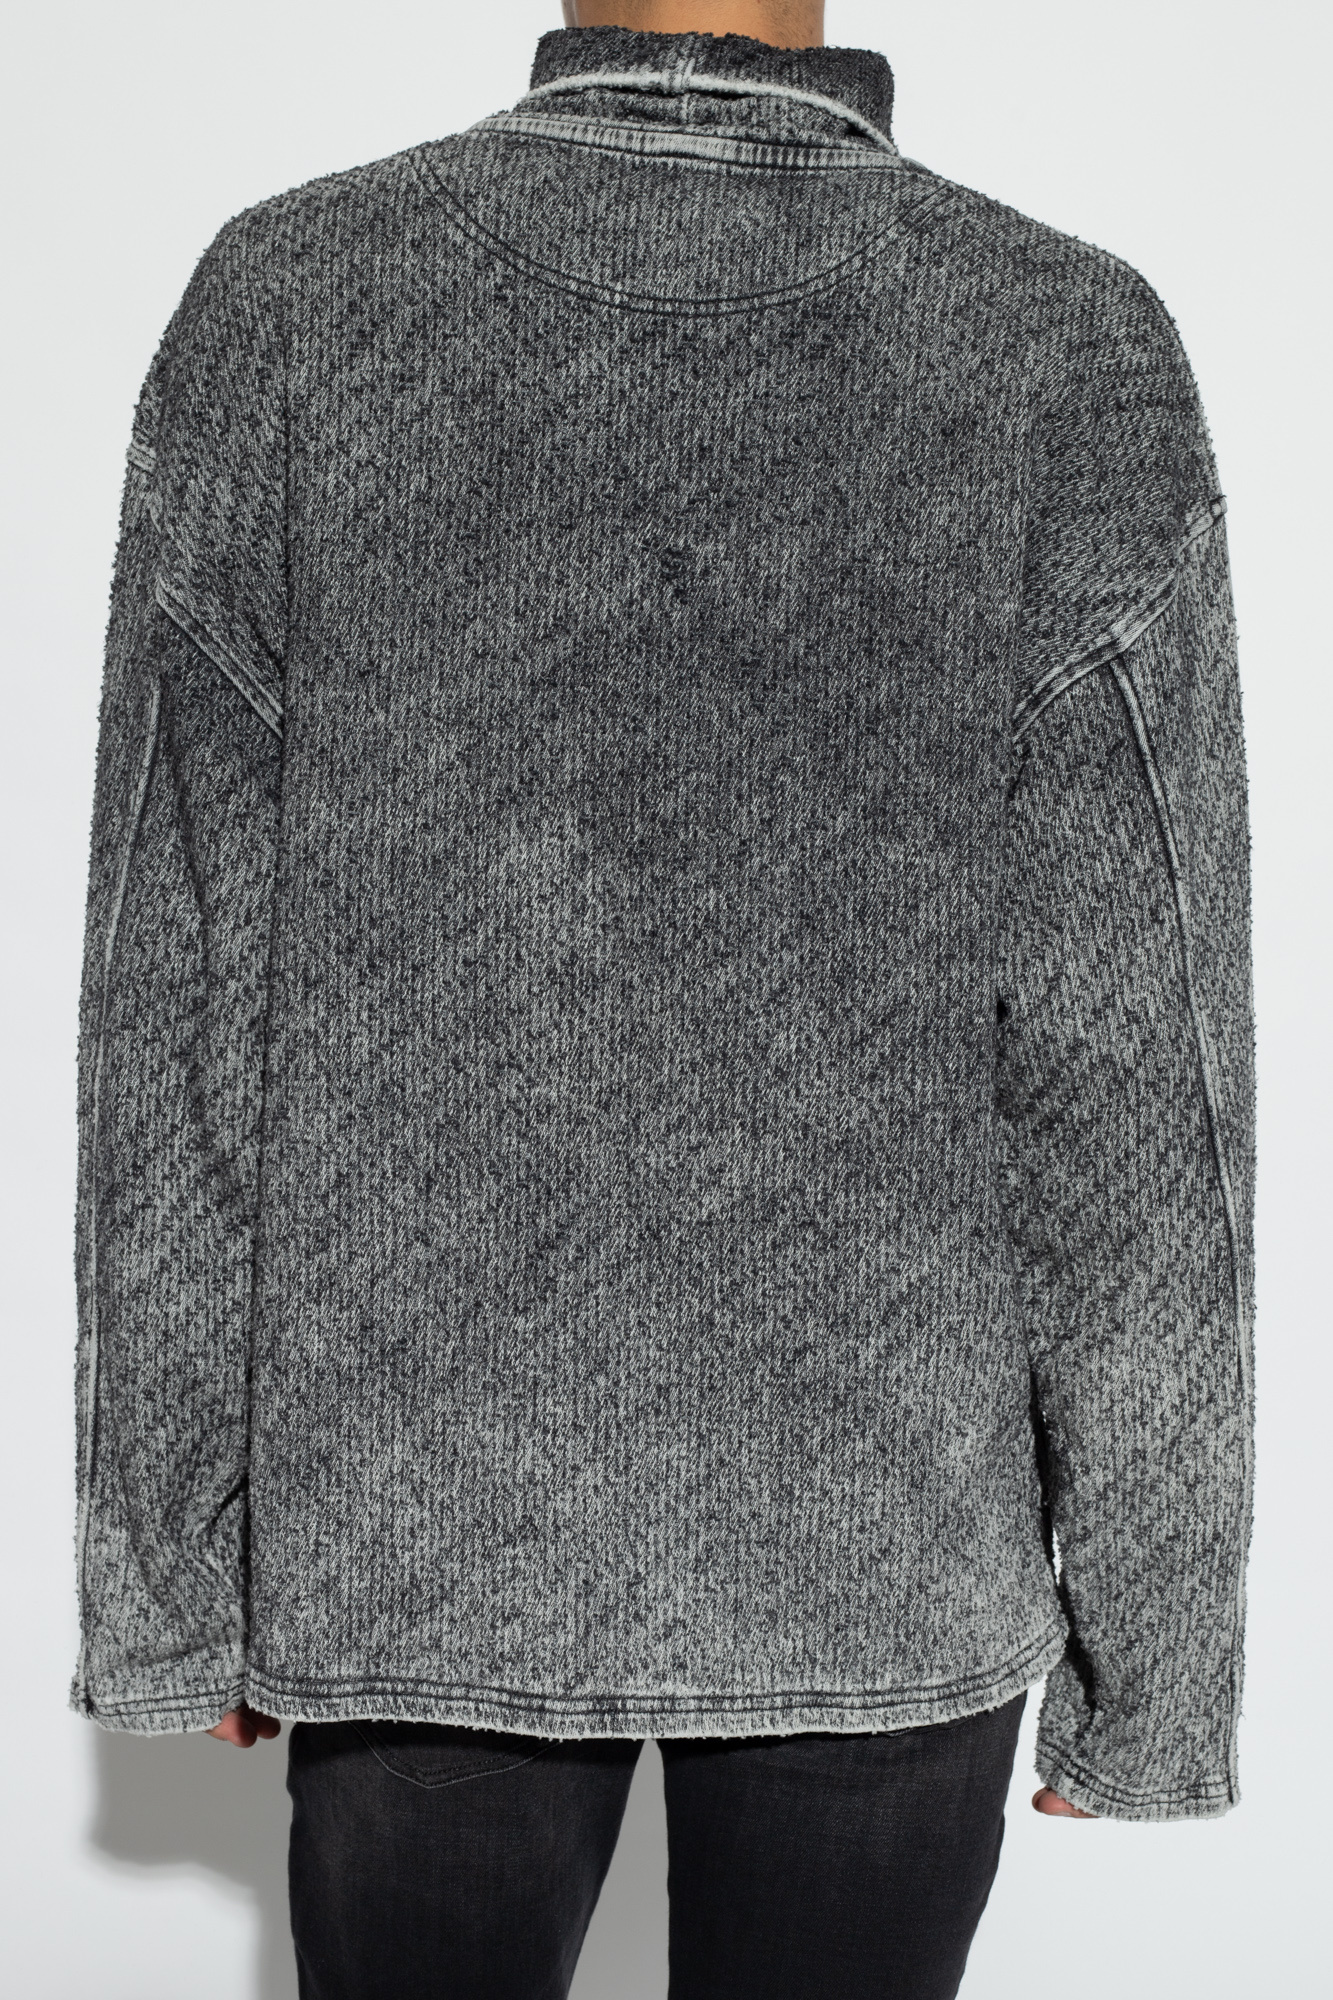 Grey ‘D-NLABELCOL-FSD-NE’ sweater with standing collar Diesel - Vitkac GB